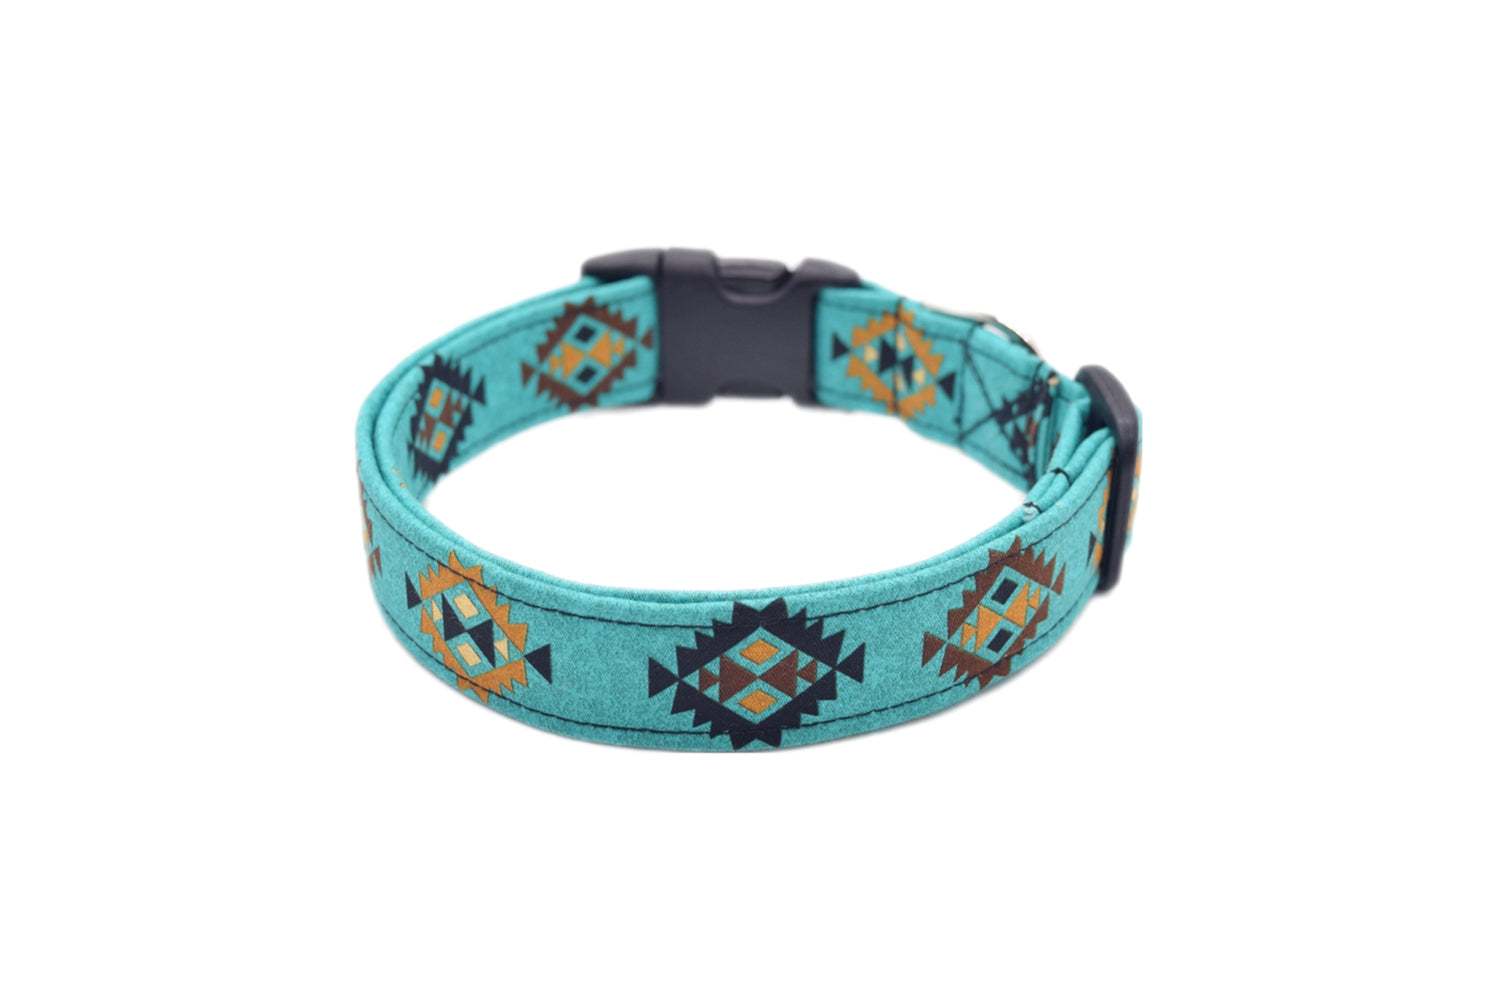 Teal Southwest Tribal Dog Collar - Handmade by Kira's Pet Shop